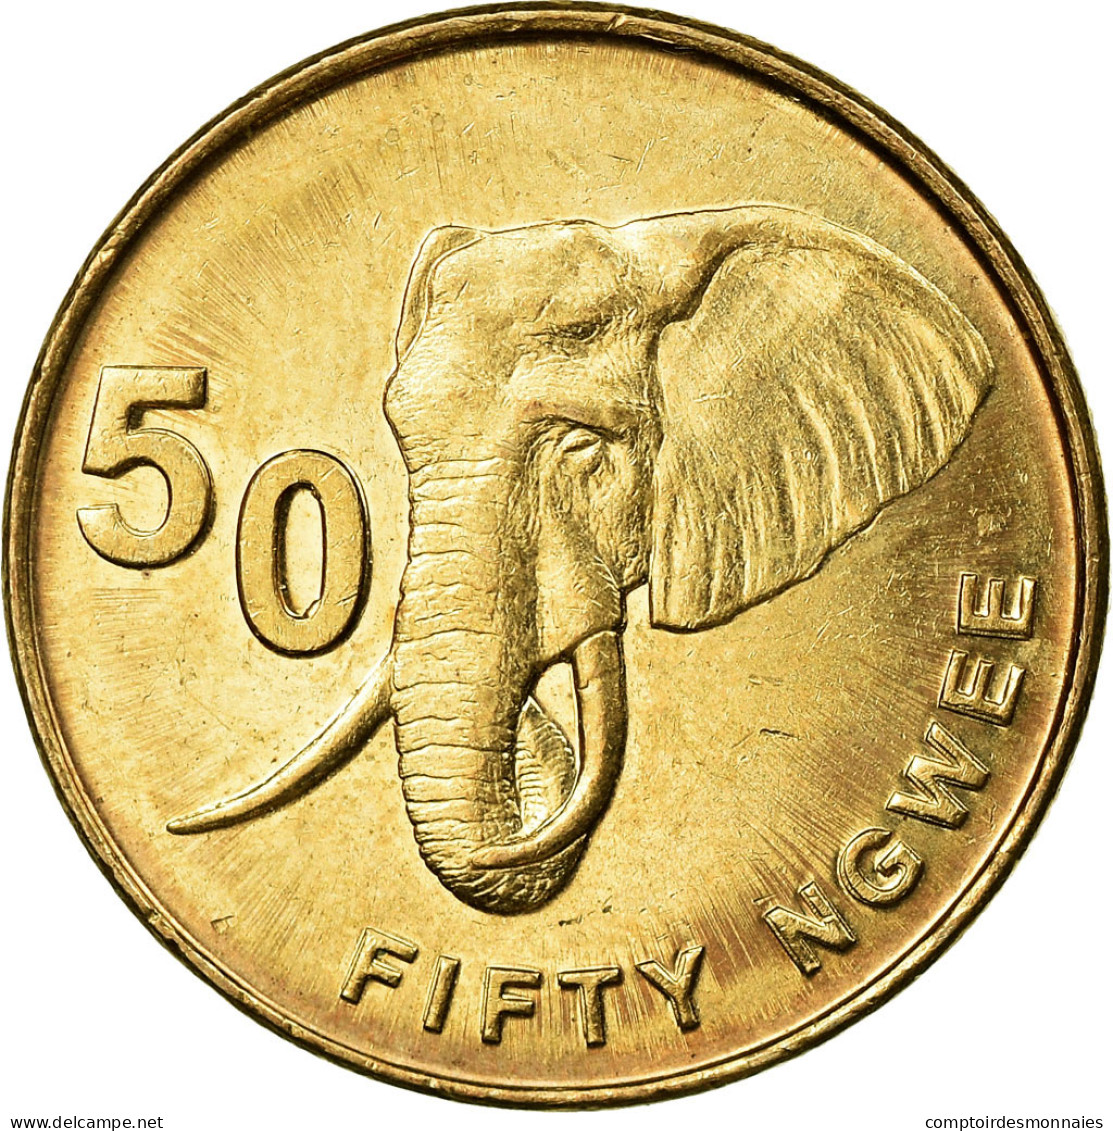 Monnaie, Zambie, 50 Ngwee, 2012, British Royal Mint, TTB, (No Composition) - Zambie